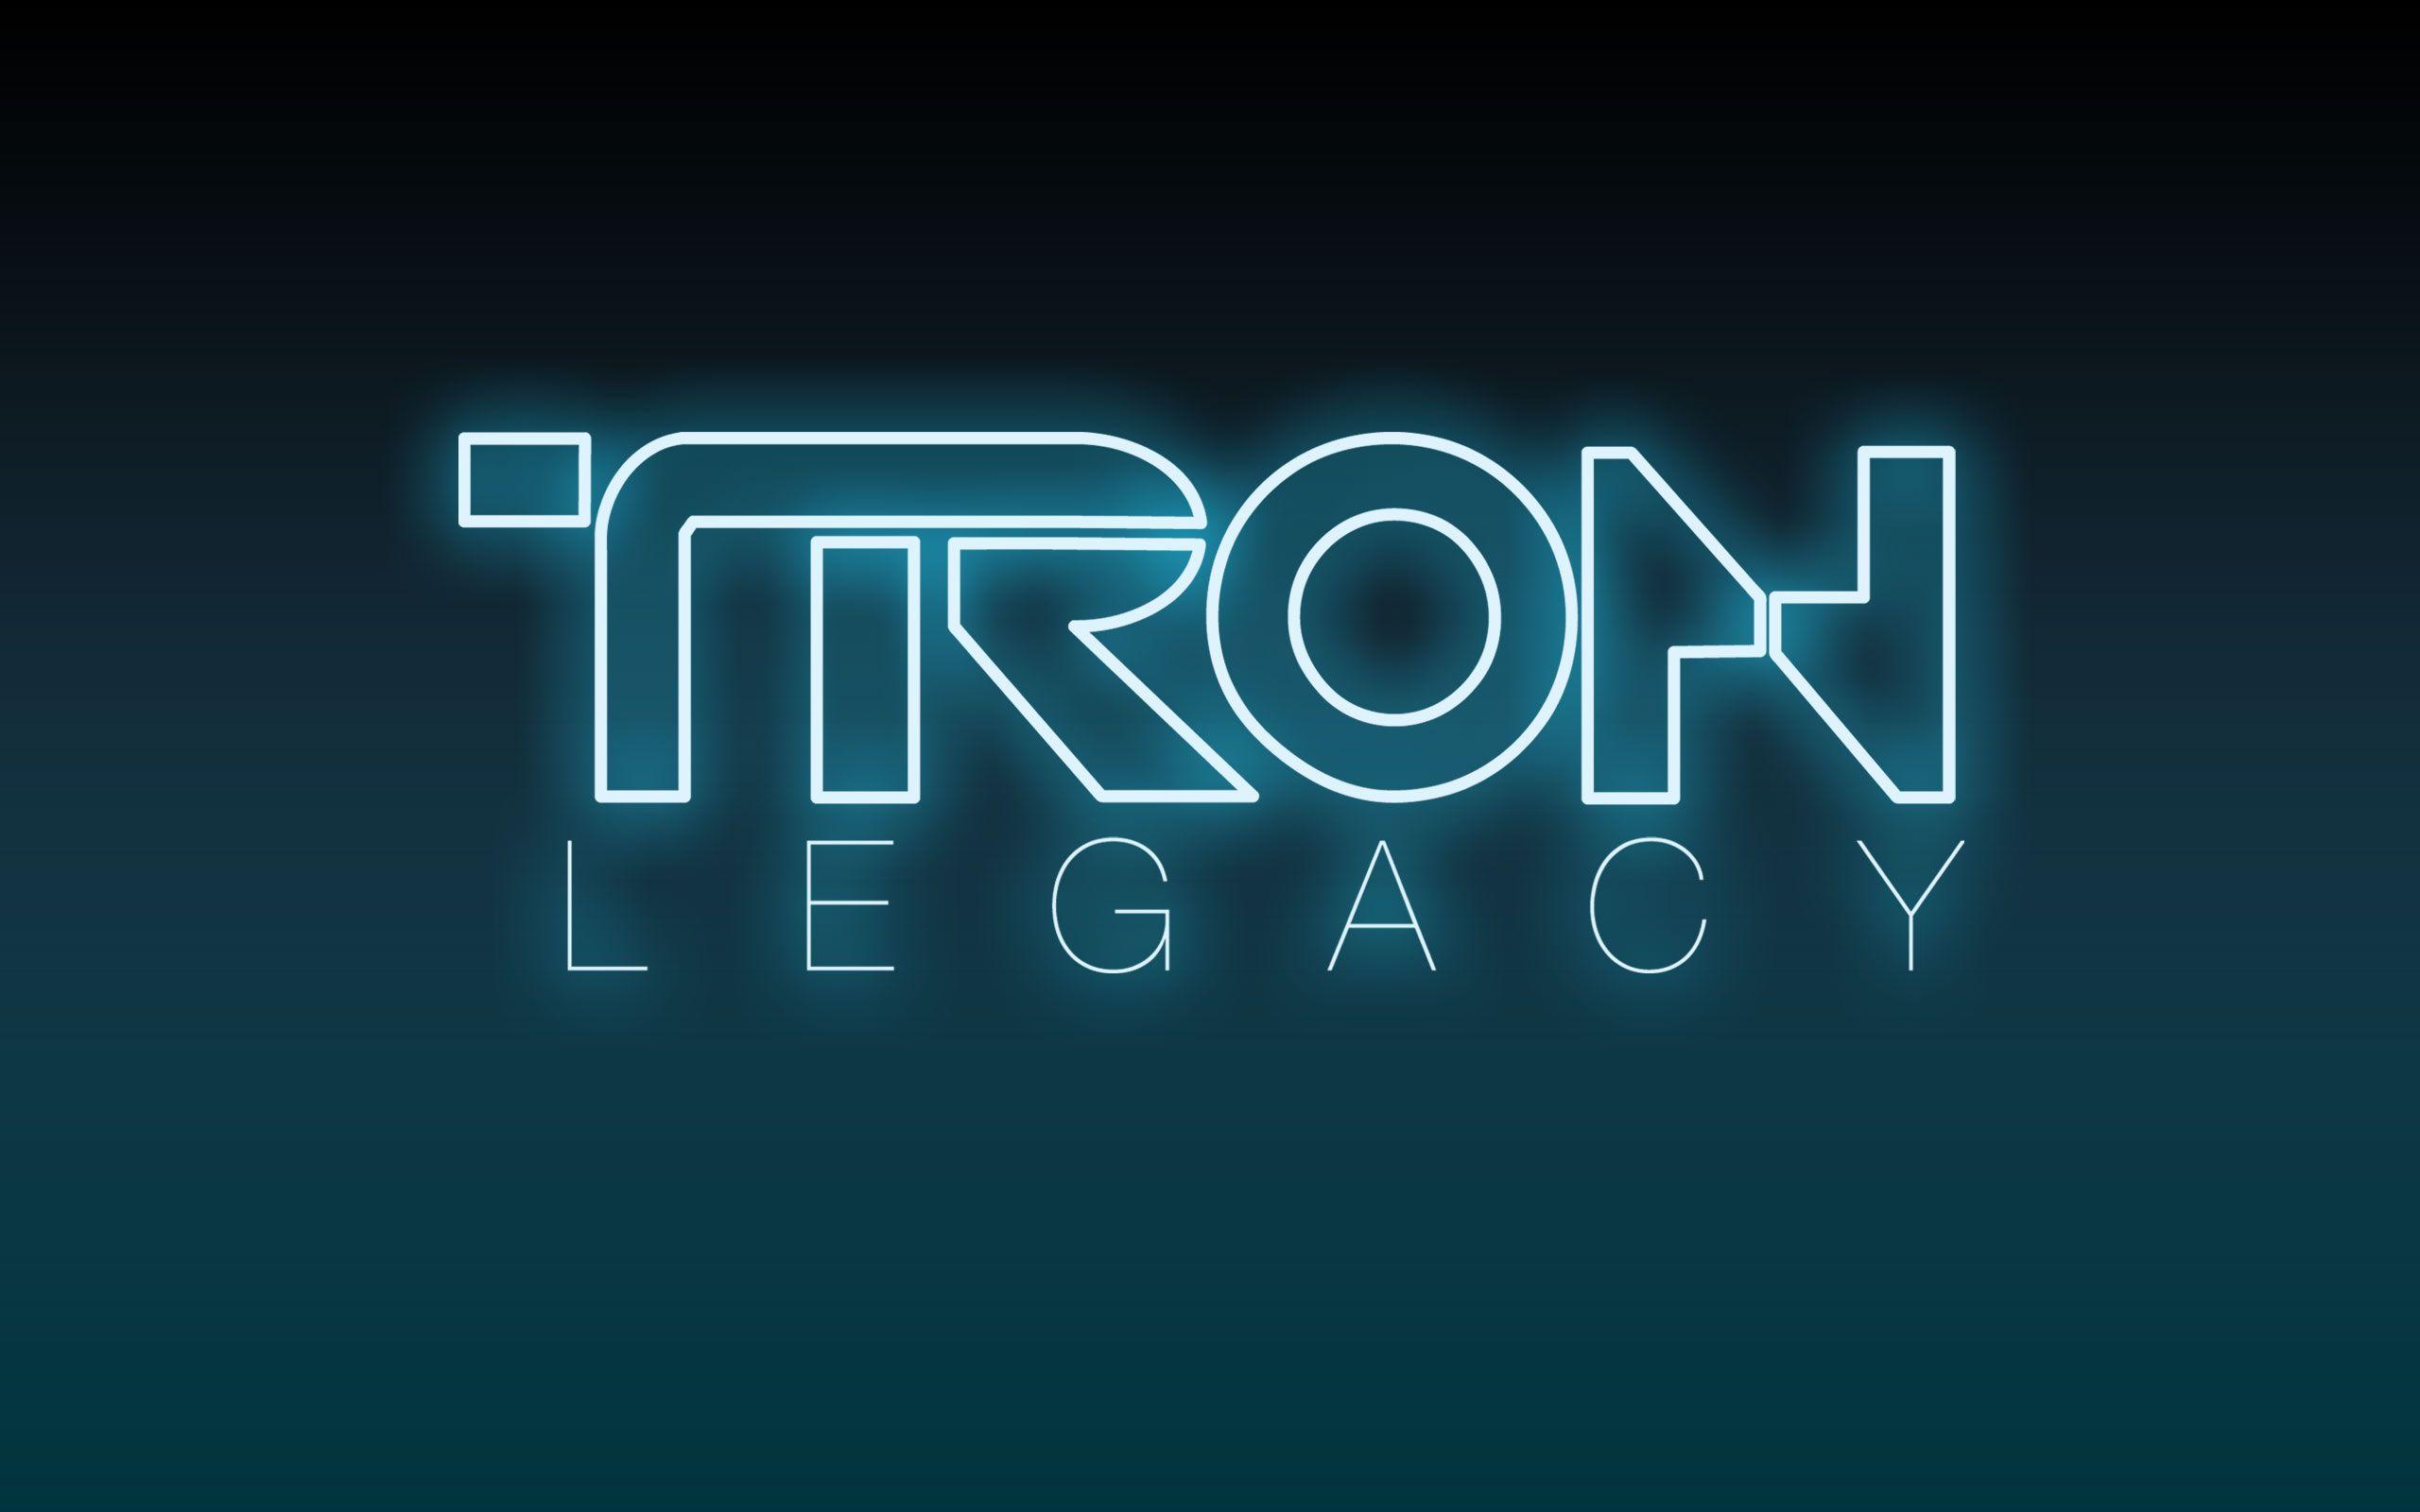 Tron Movie Logo - Disney's Tron: Legacy Movie Logo Desktop Wallpaper